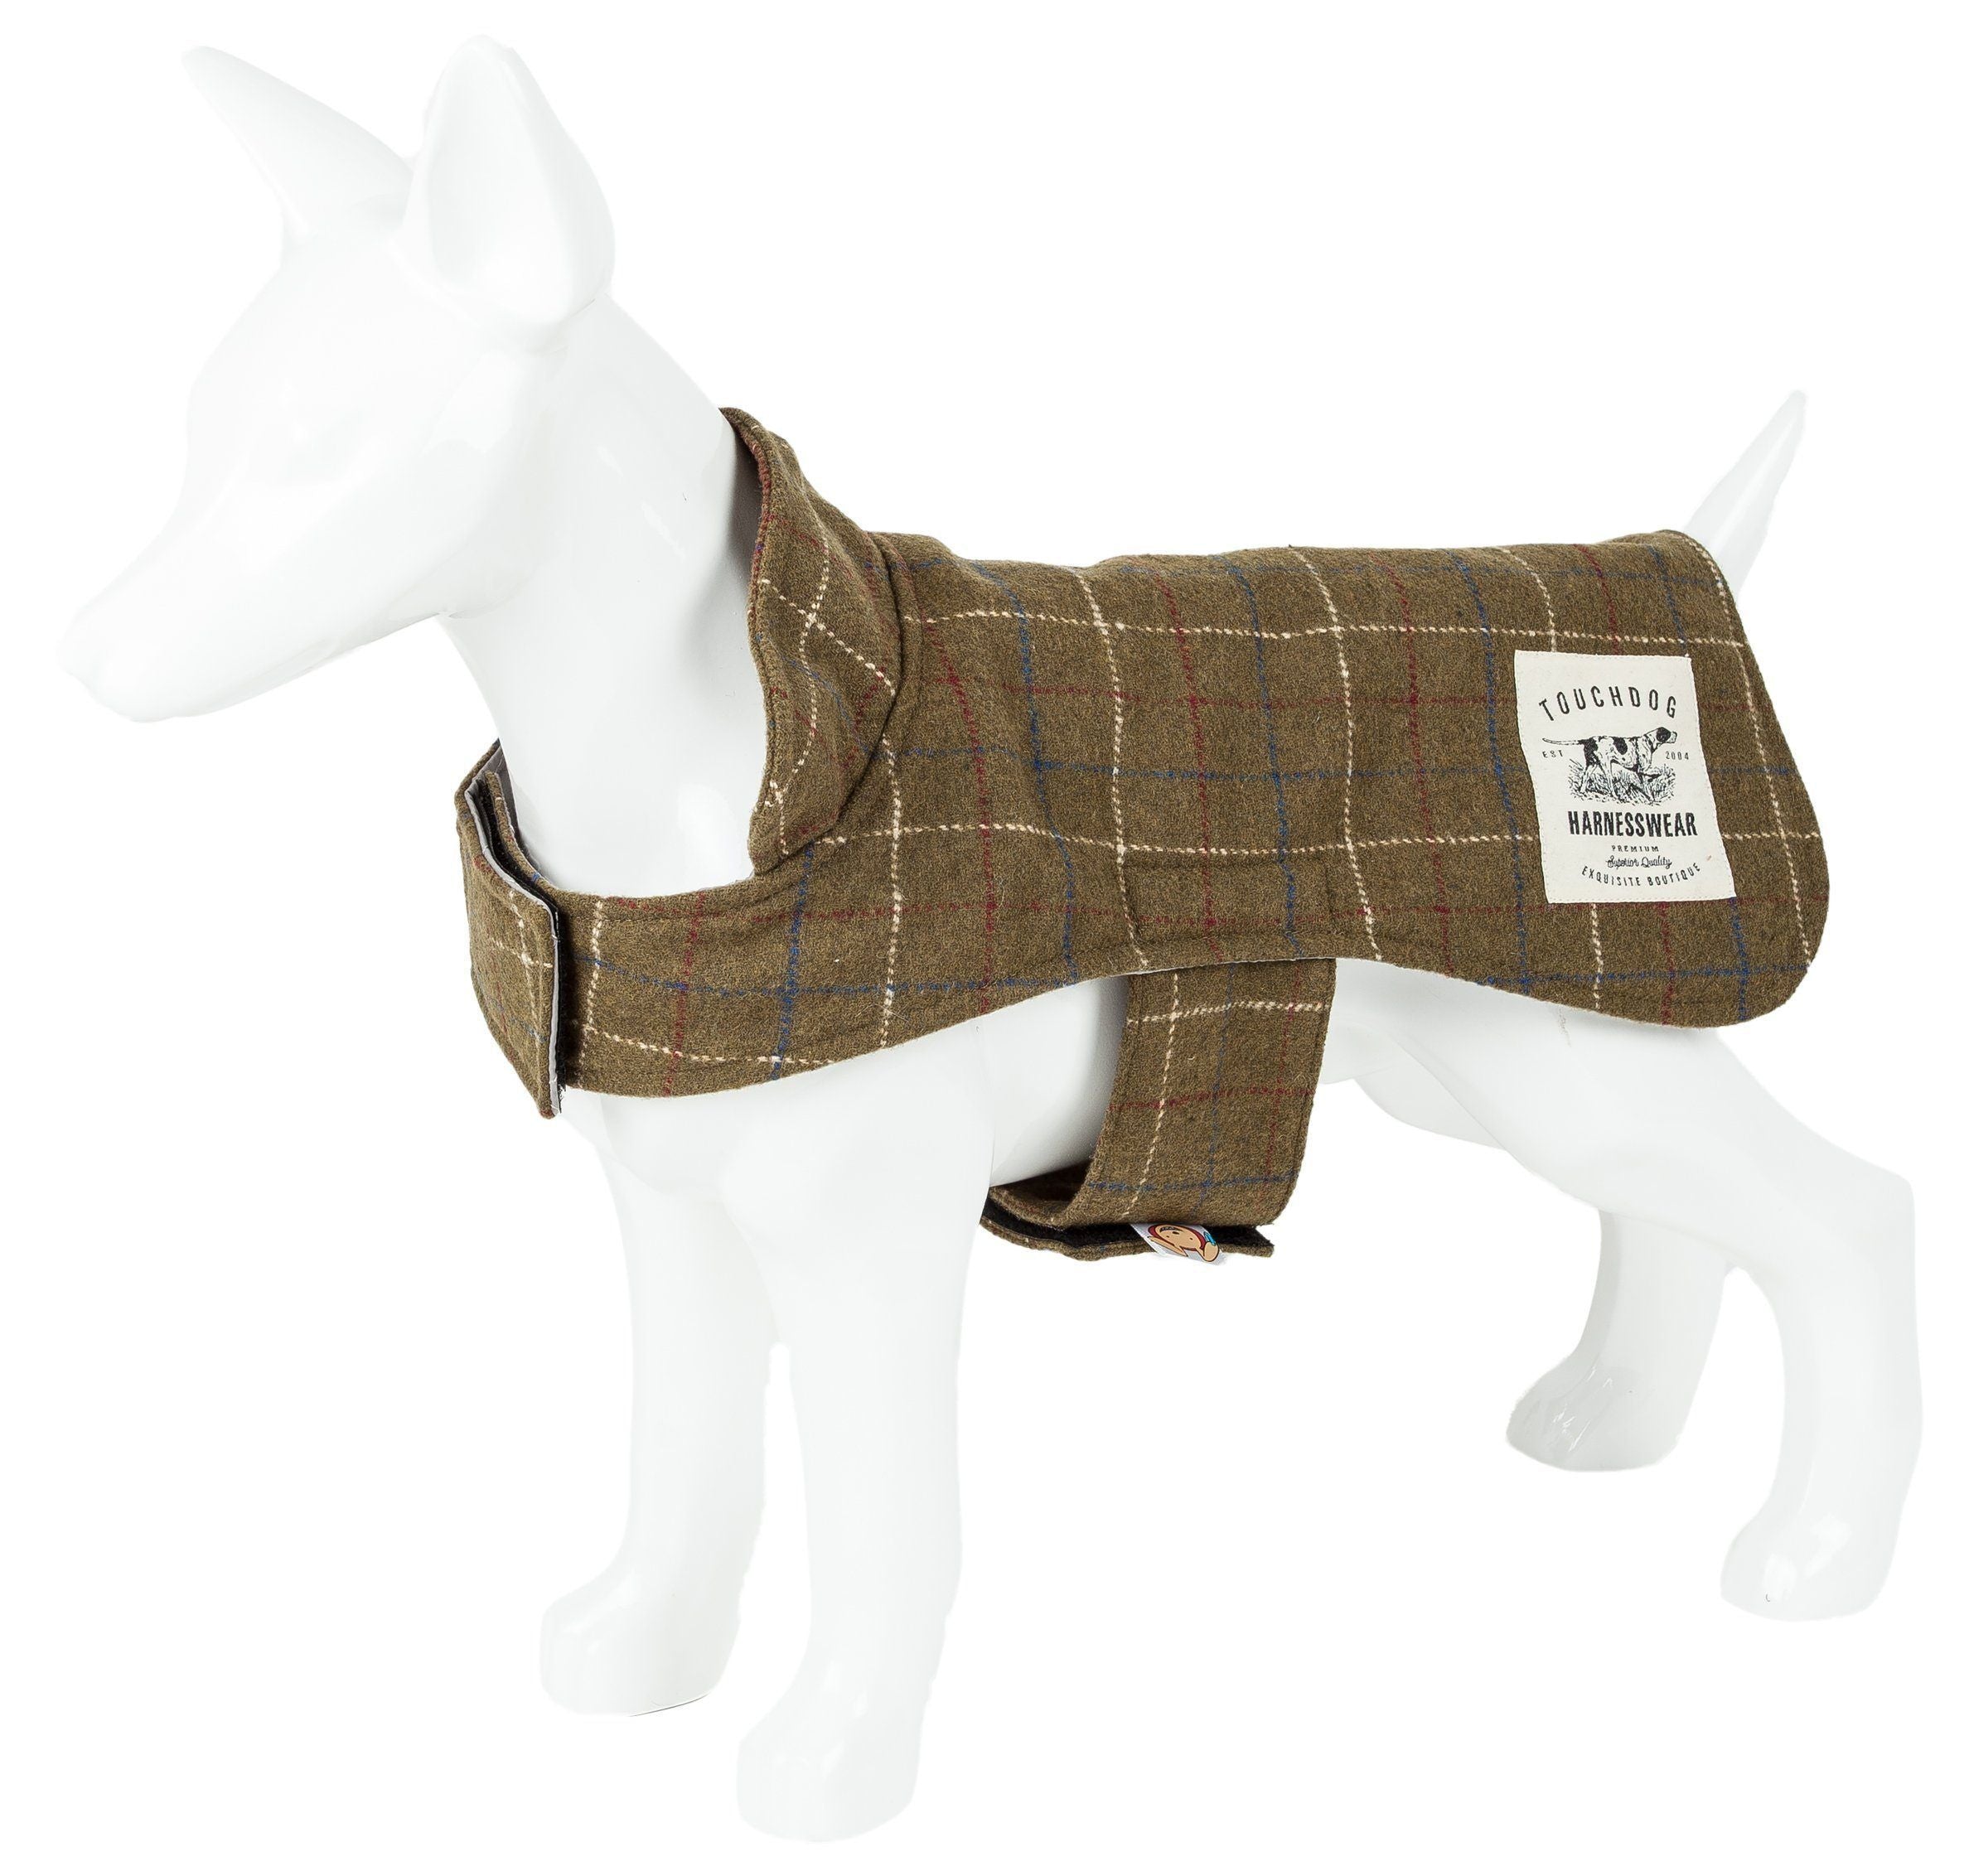 Touchdog ® 2-In-1 Windowpane Plaid Dog Jacket and Matching Reversible Dog Mat  